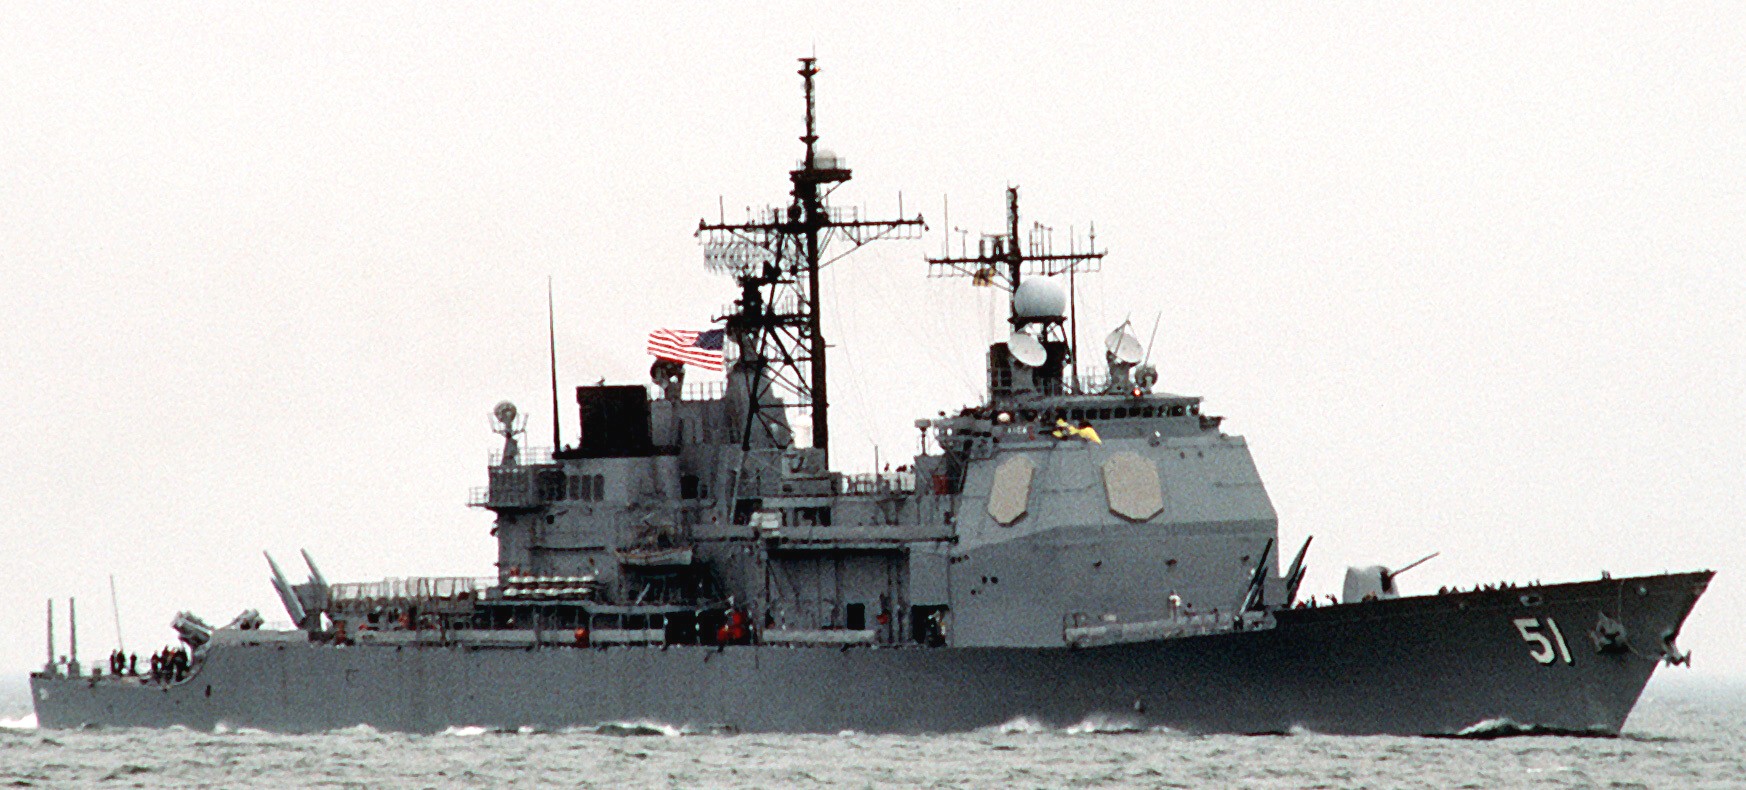 cg-51 uss thomas s. gates ticonderoga class guided missile cruiser aegis us navy 46